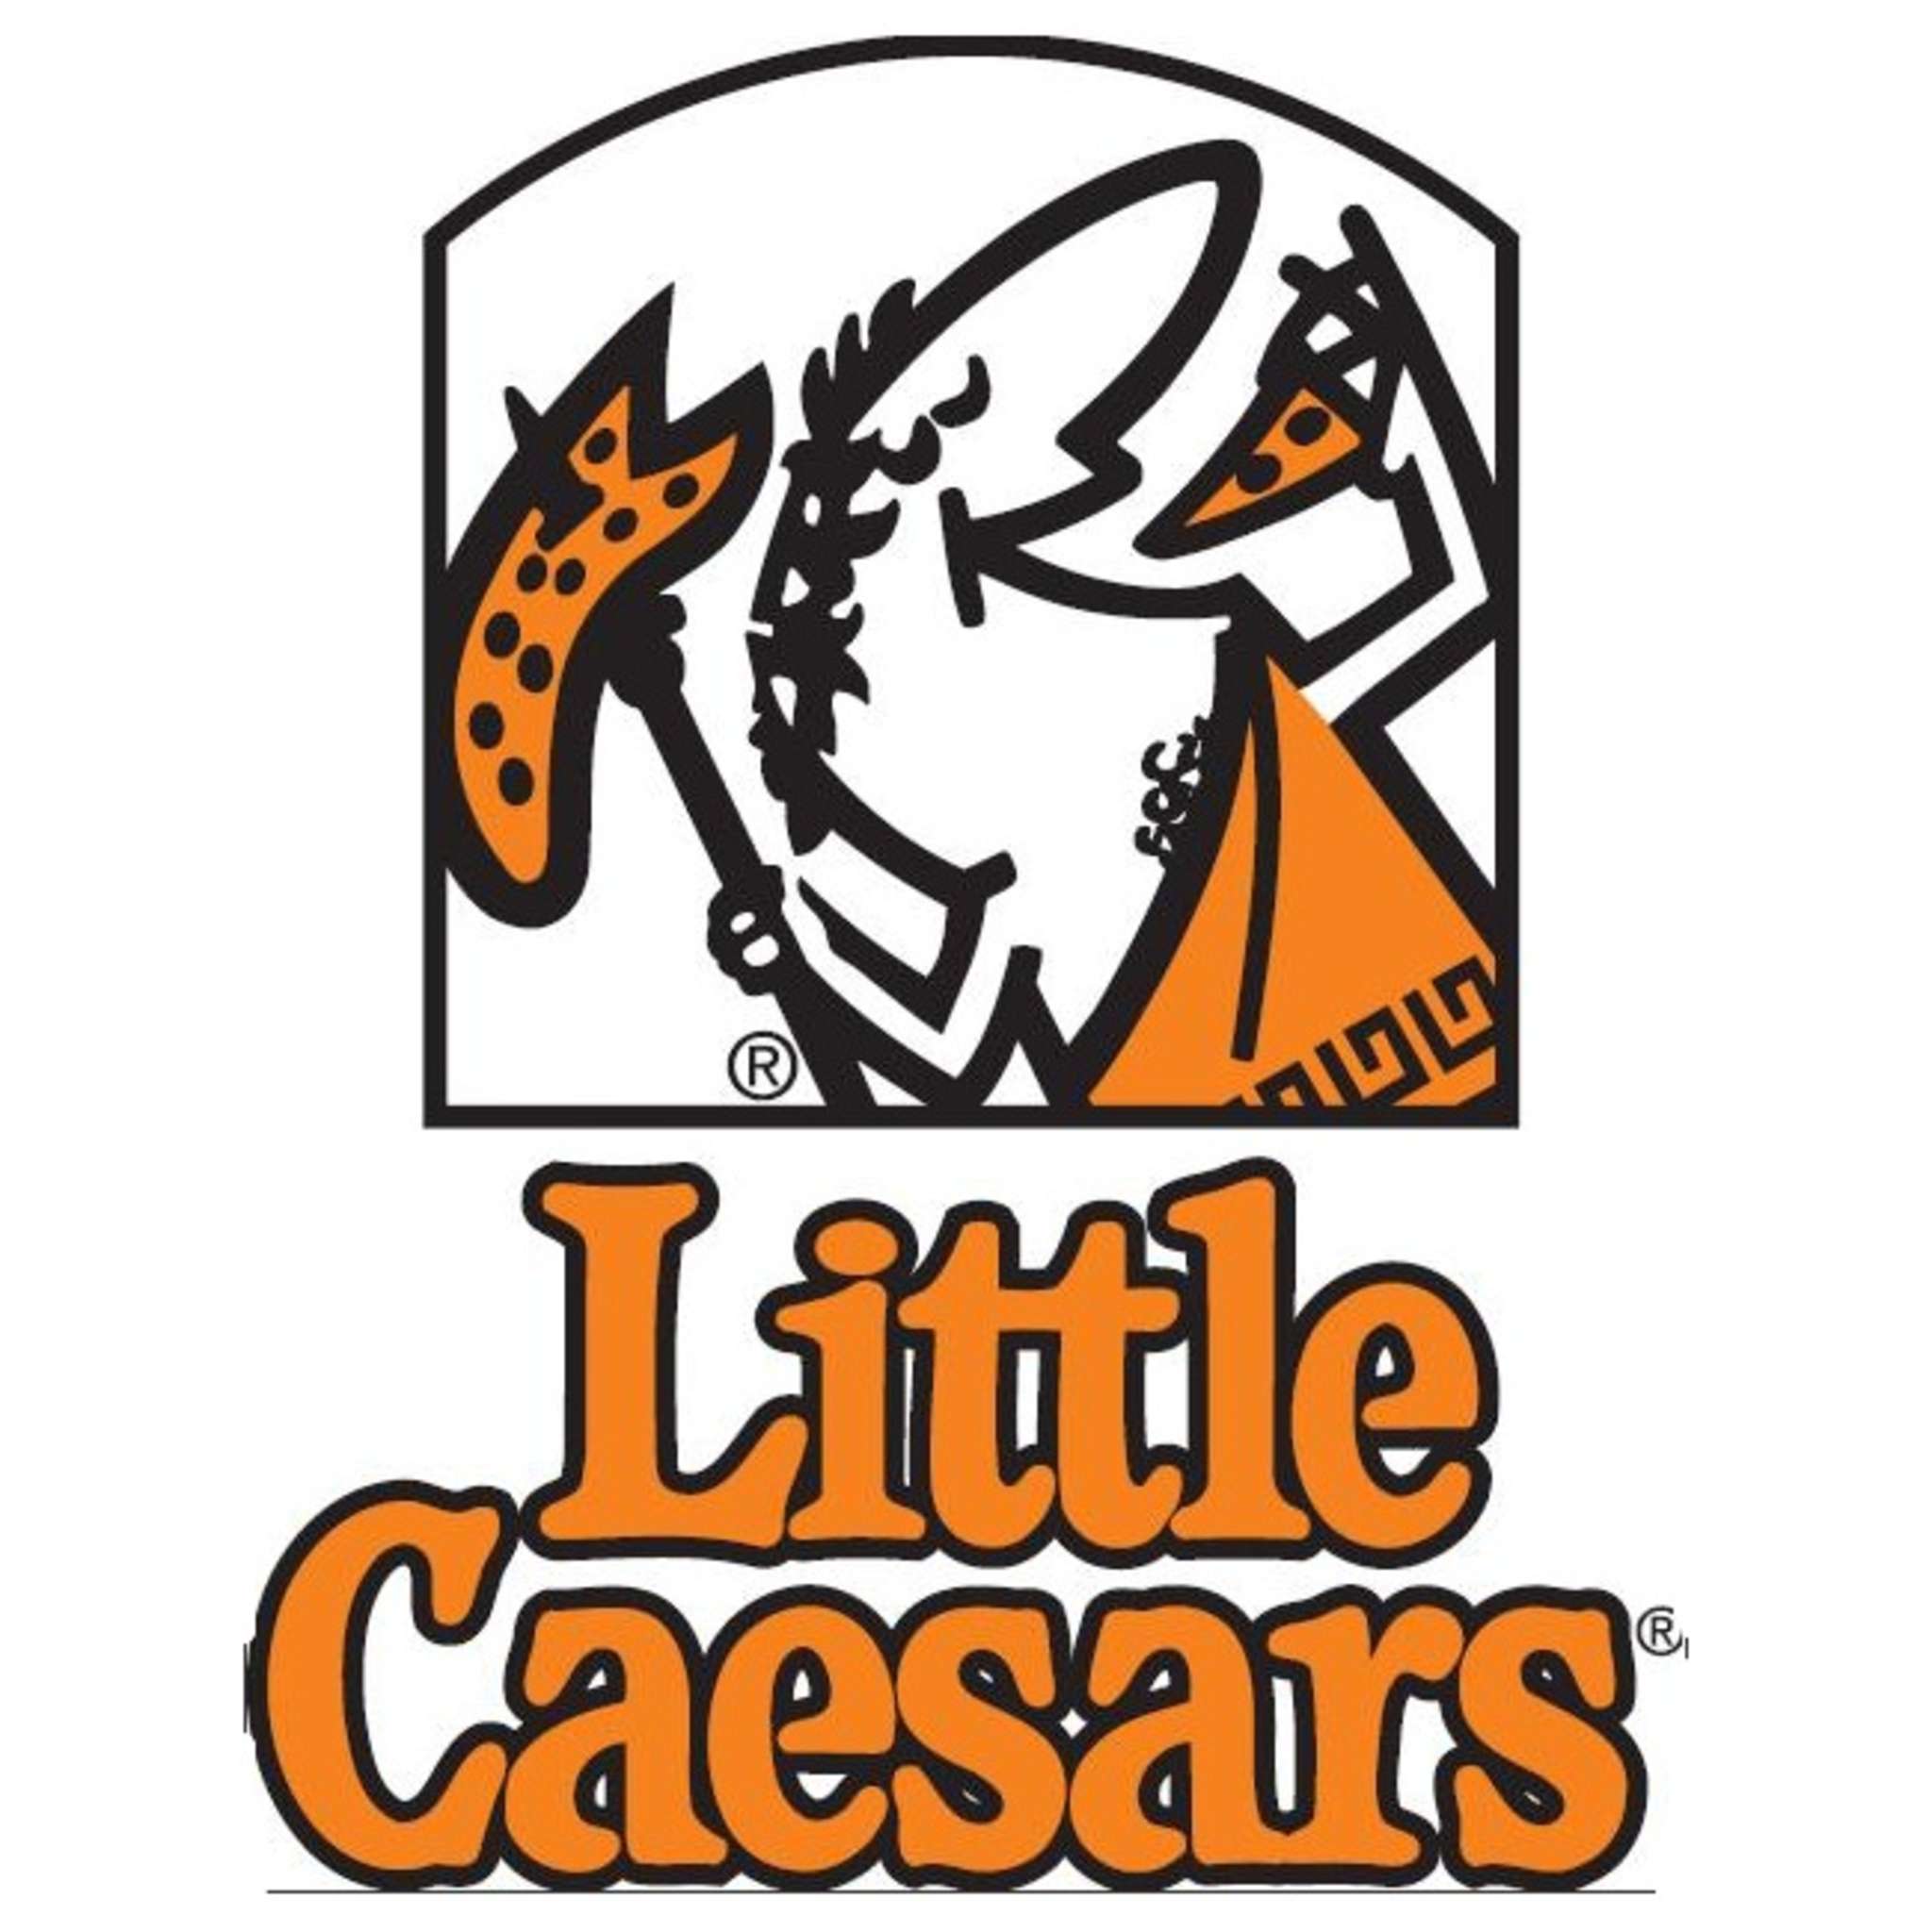 Little Caesars Logo - Little caesars pizza Logos